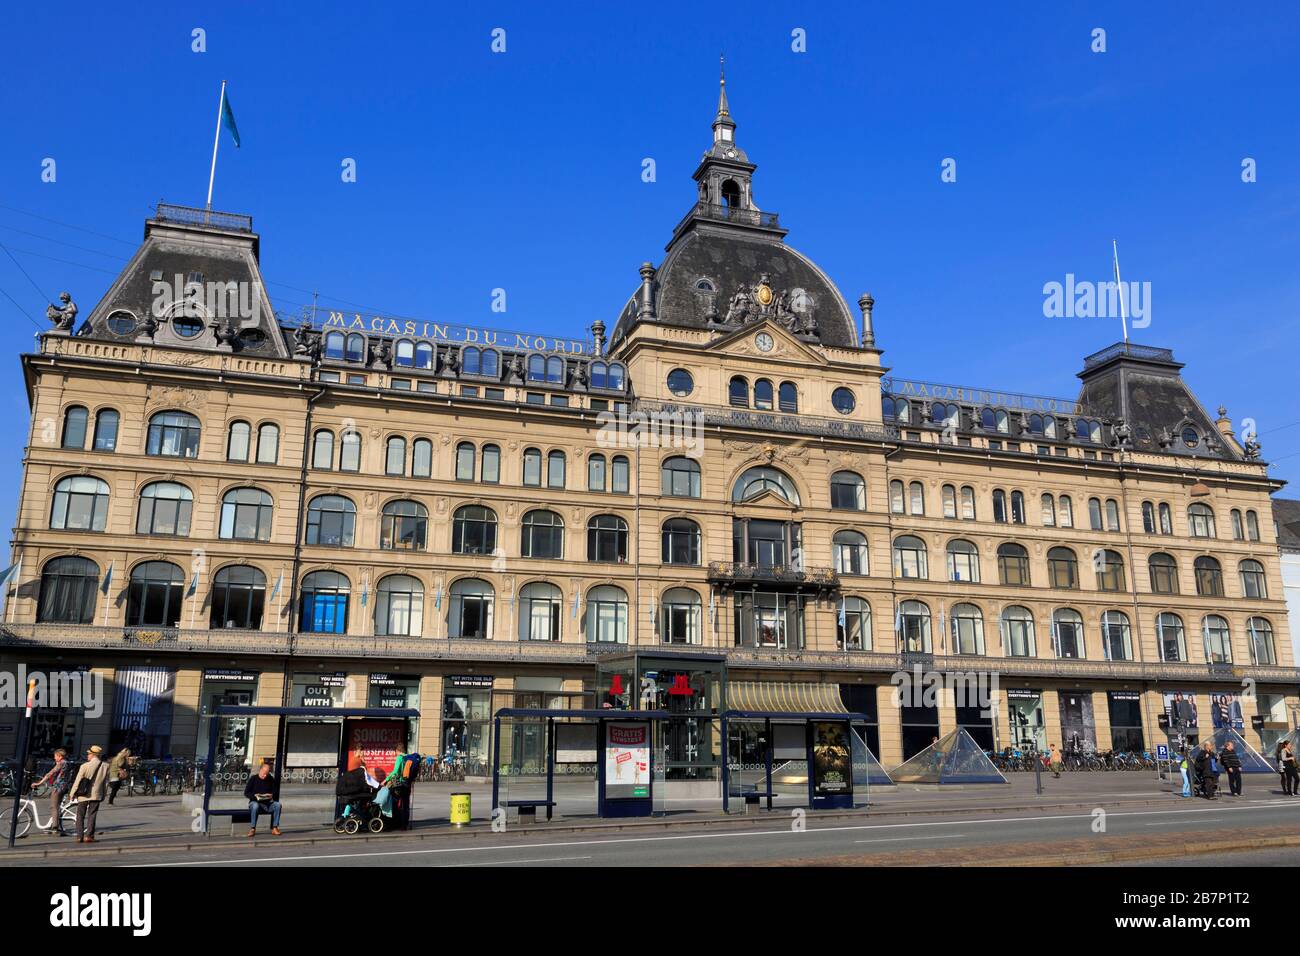 Magasin du Nord Department Store, Copenhagen, Europe Stock Photo - Alamy